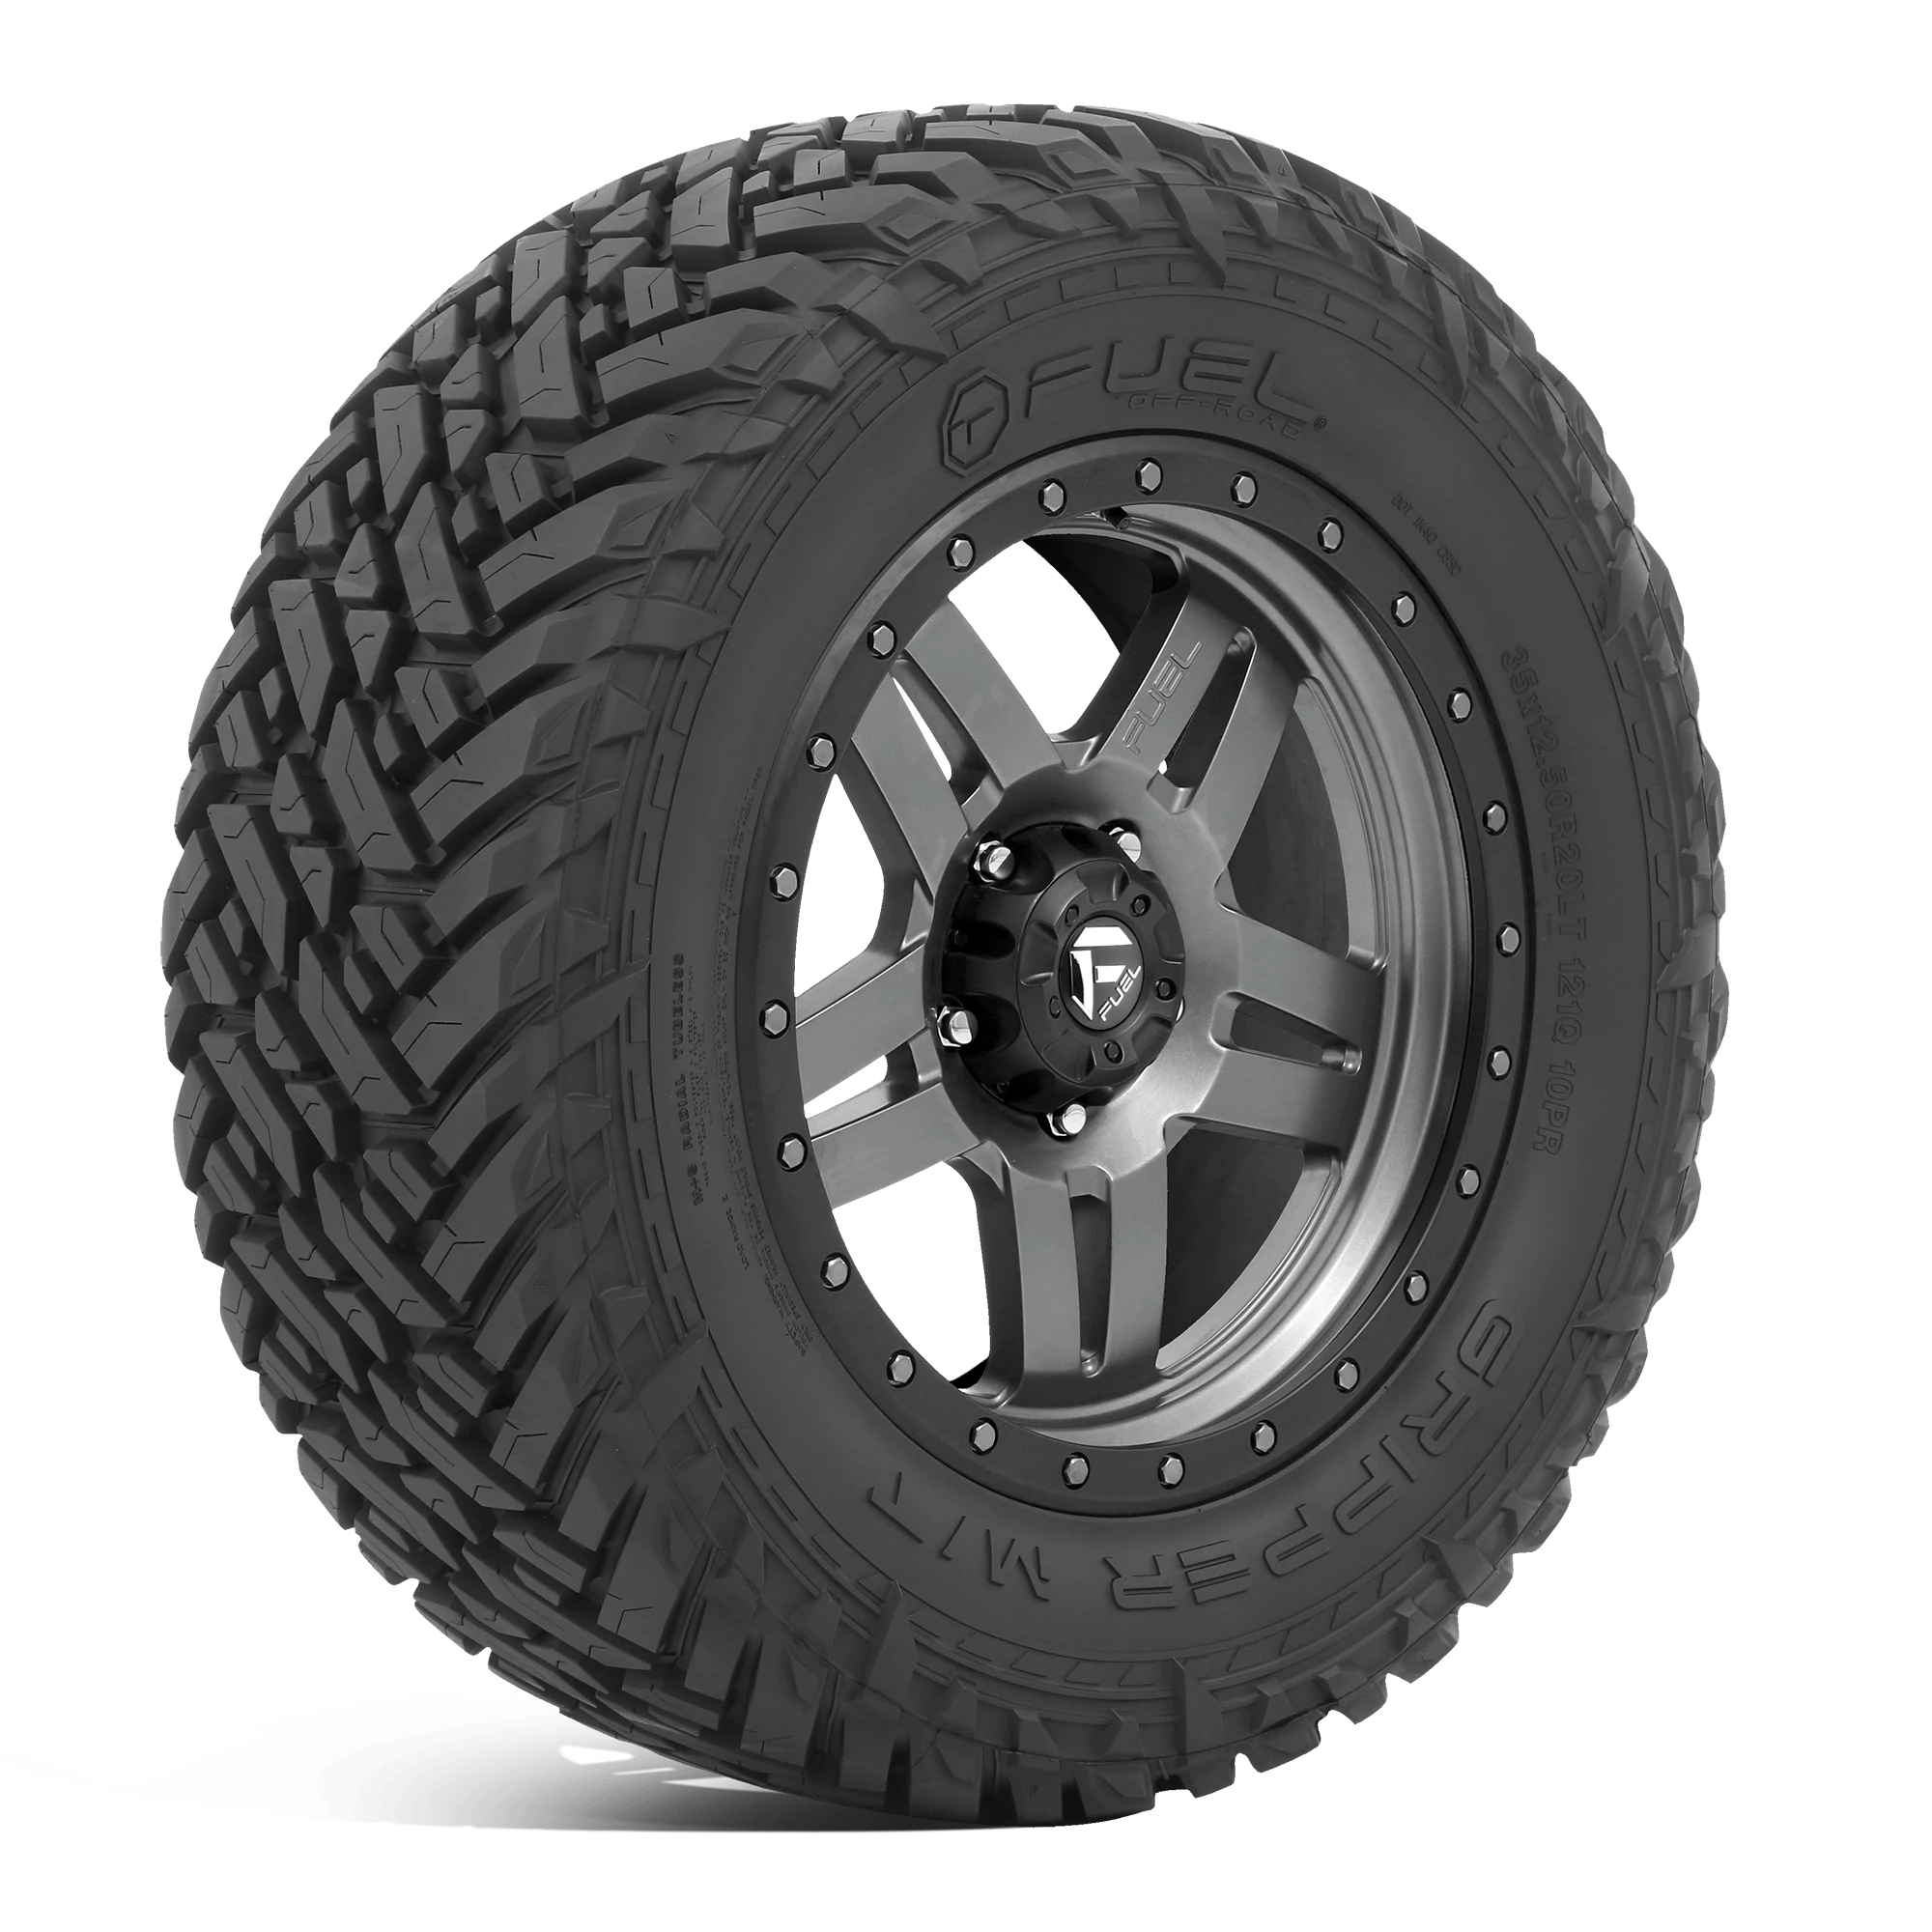 FUEL MUD GRIPPER LT38X15.50R20 Tires